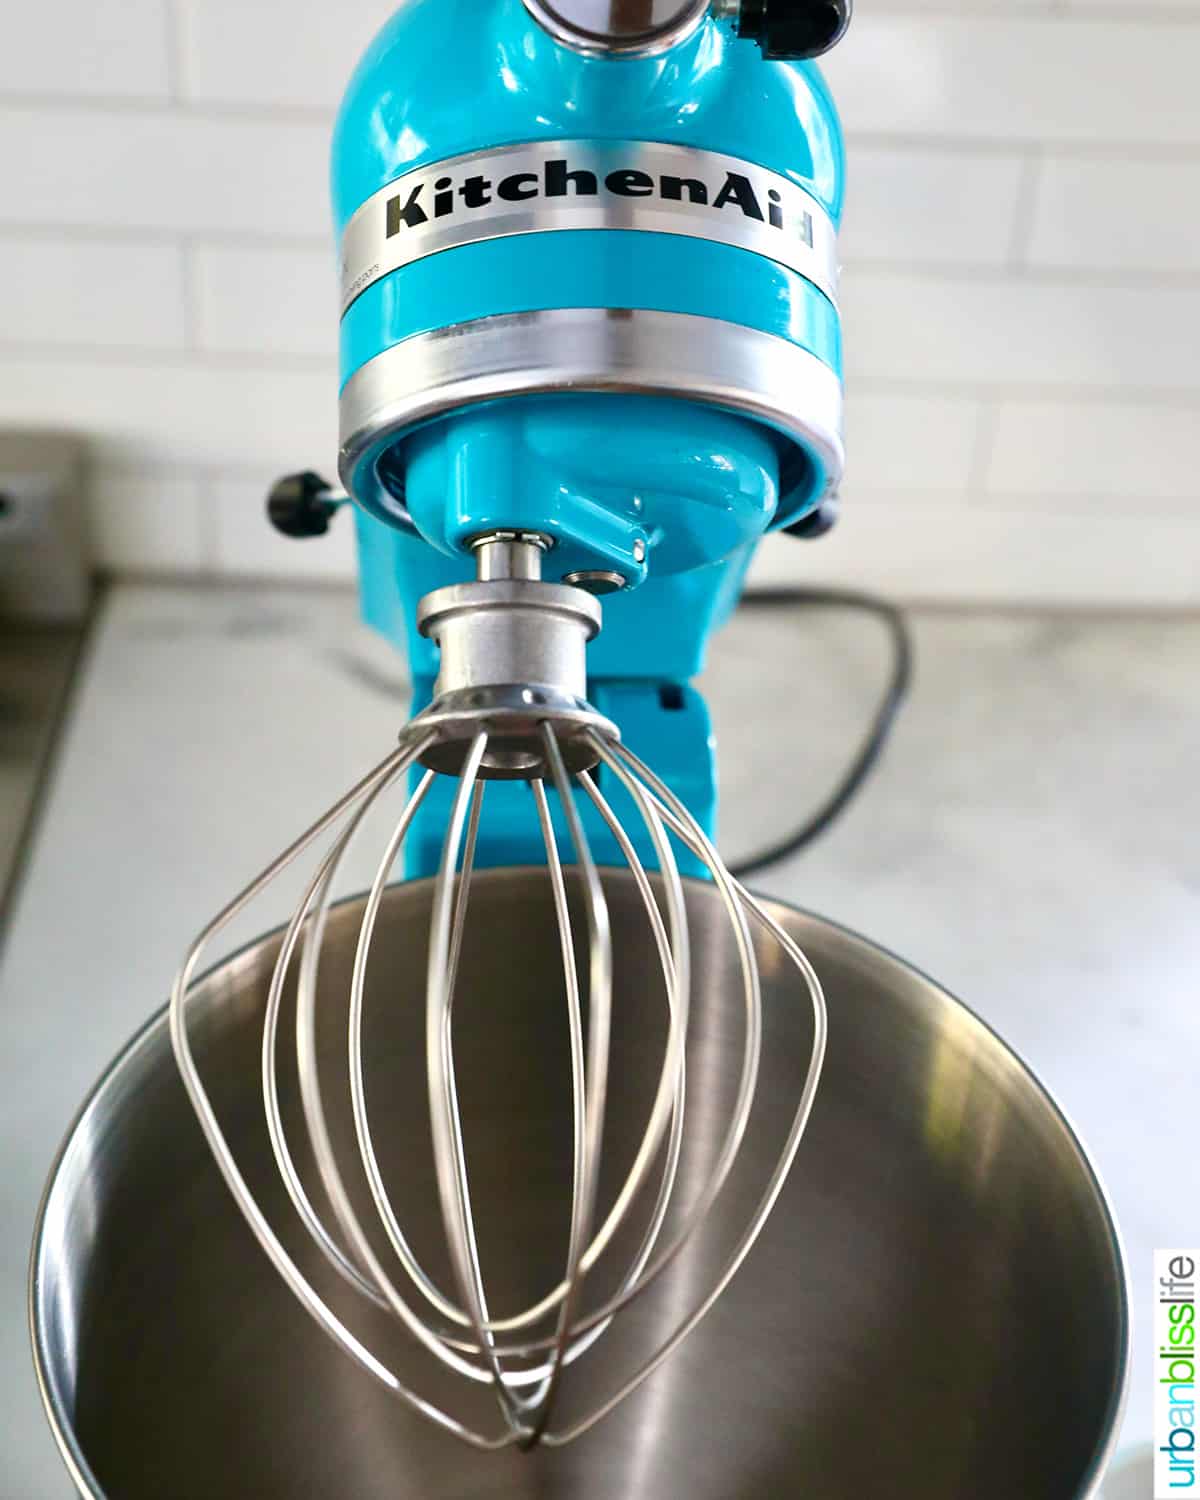 aqua blue Kitchenaid stand mixer with whisk attachment.